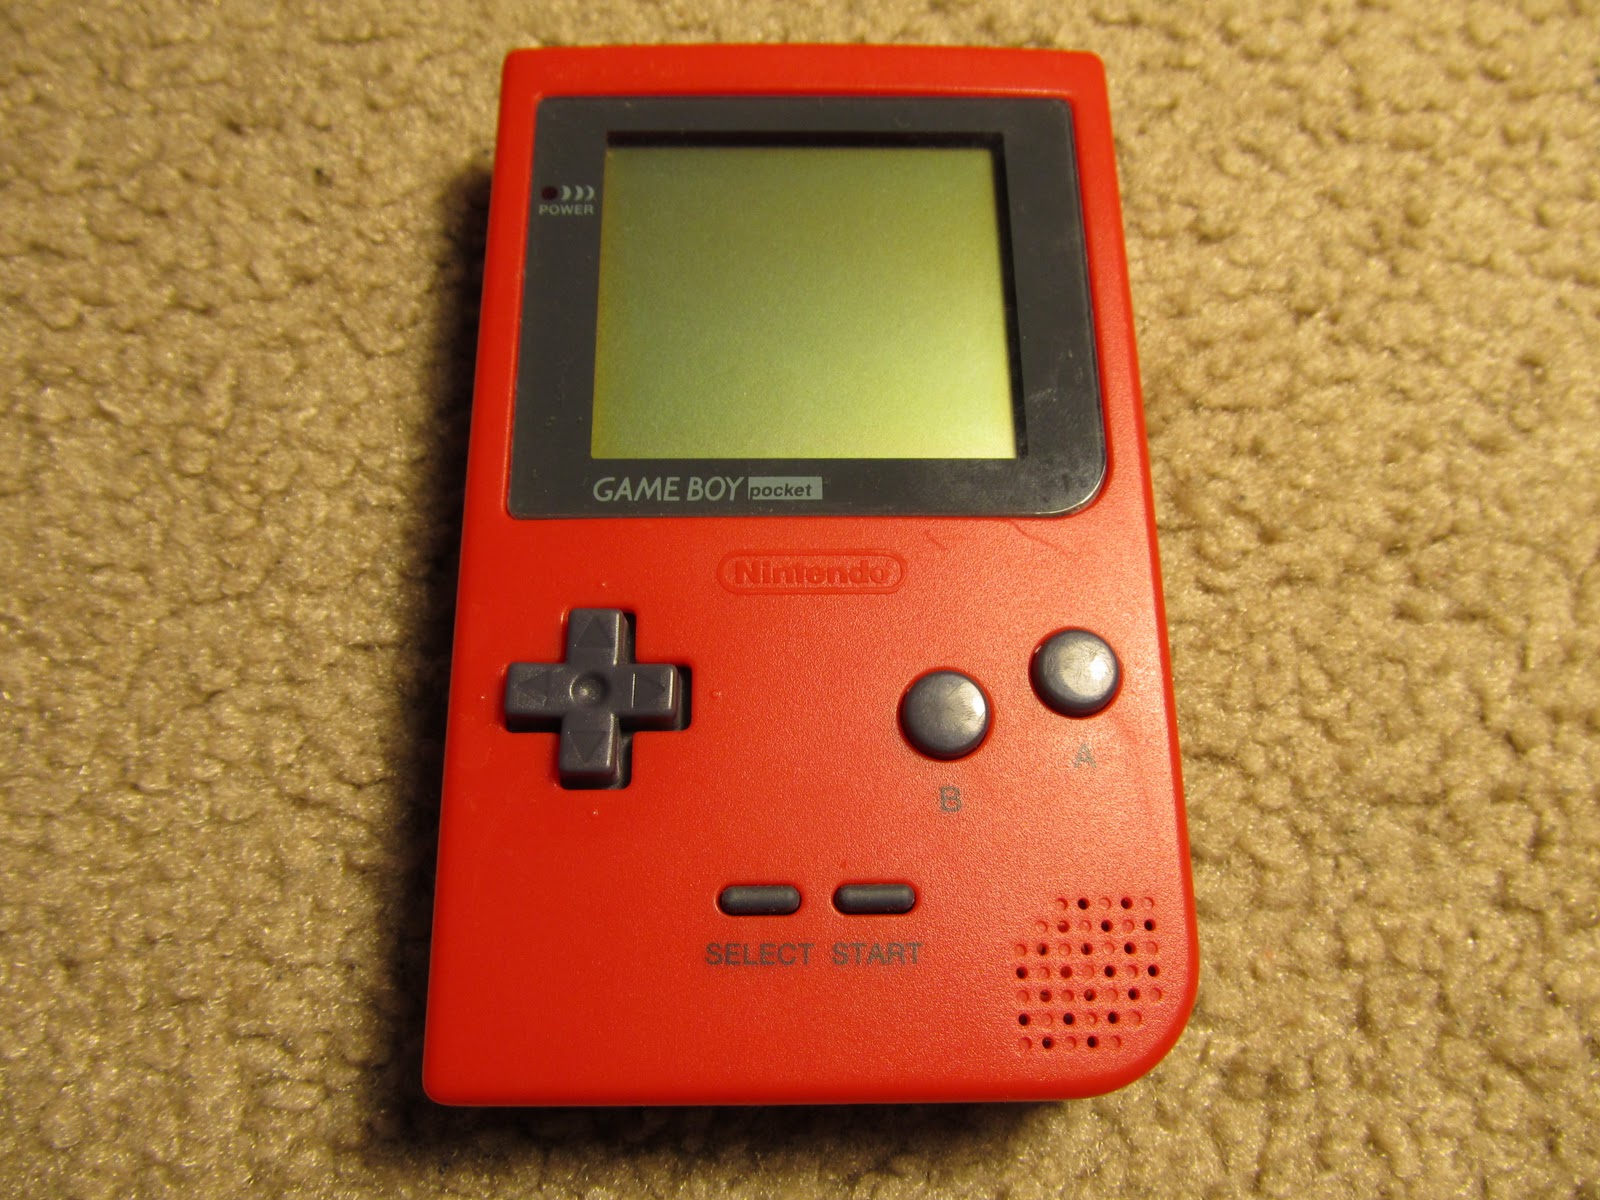 Nintendo ребенку. Геймбой 2. Нинтендо геймбой. Геймбой приставка из 90х. Nintendo game boy Pocket.